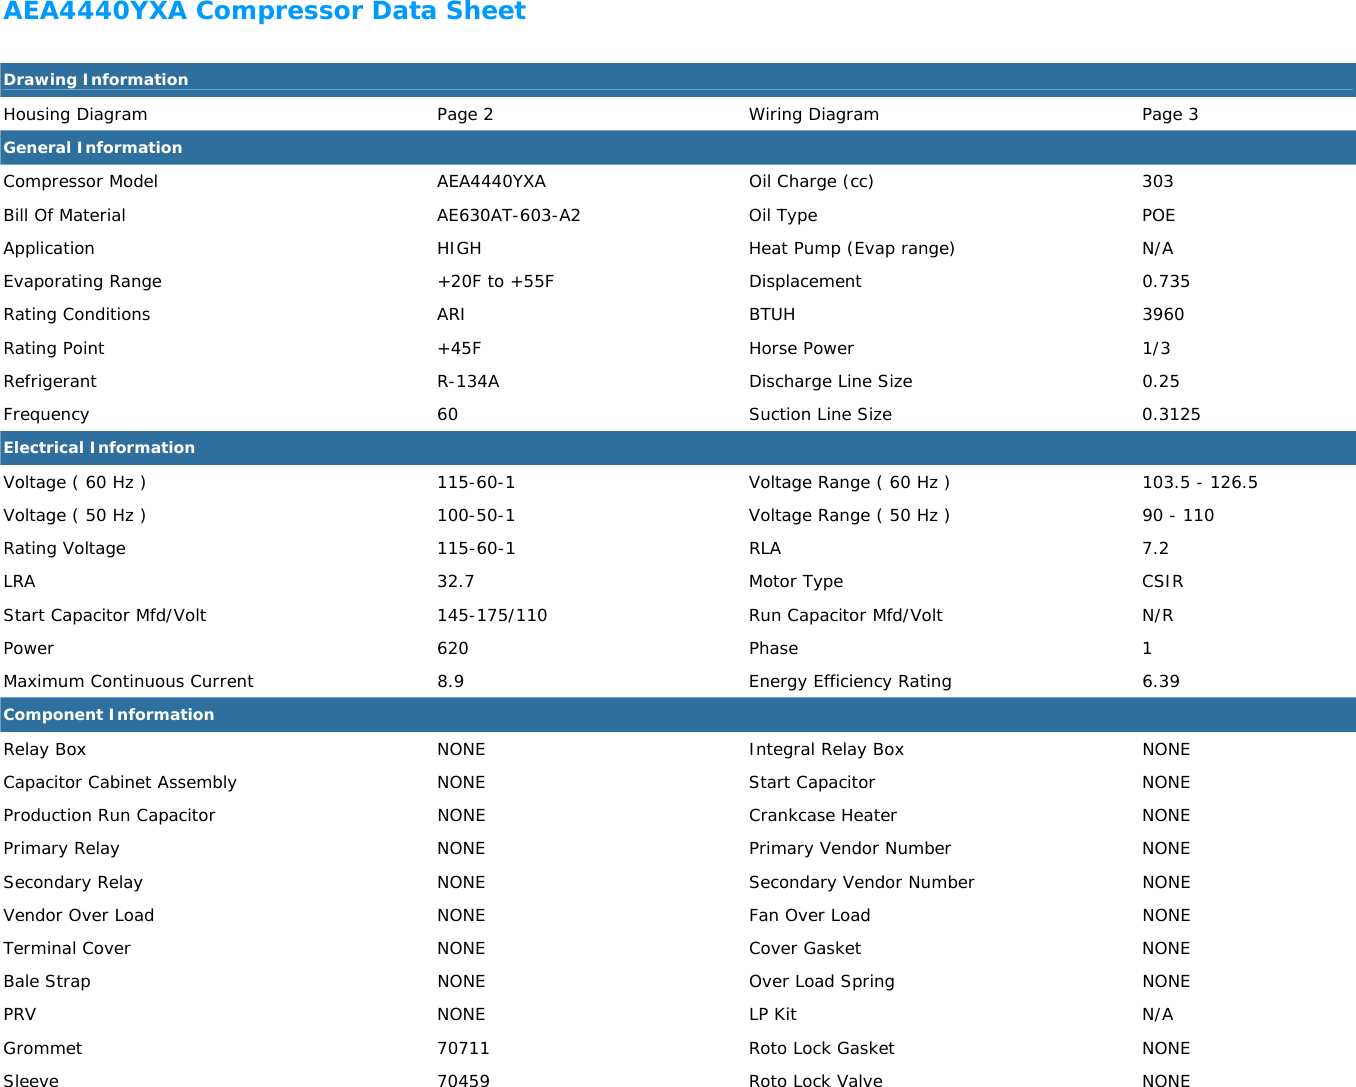 Page 1 of 3 - AEA4440YXA Compressor Data Sheet